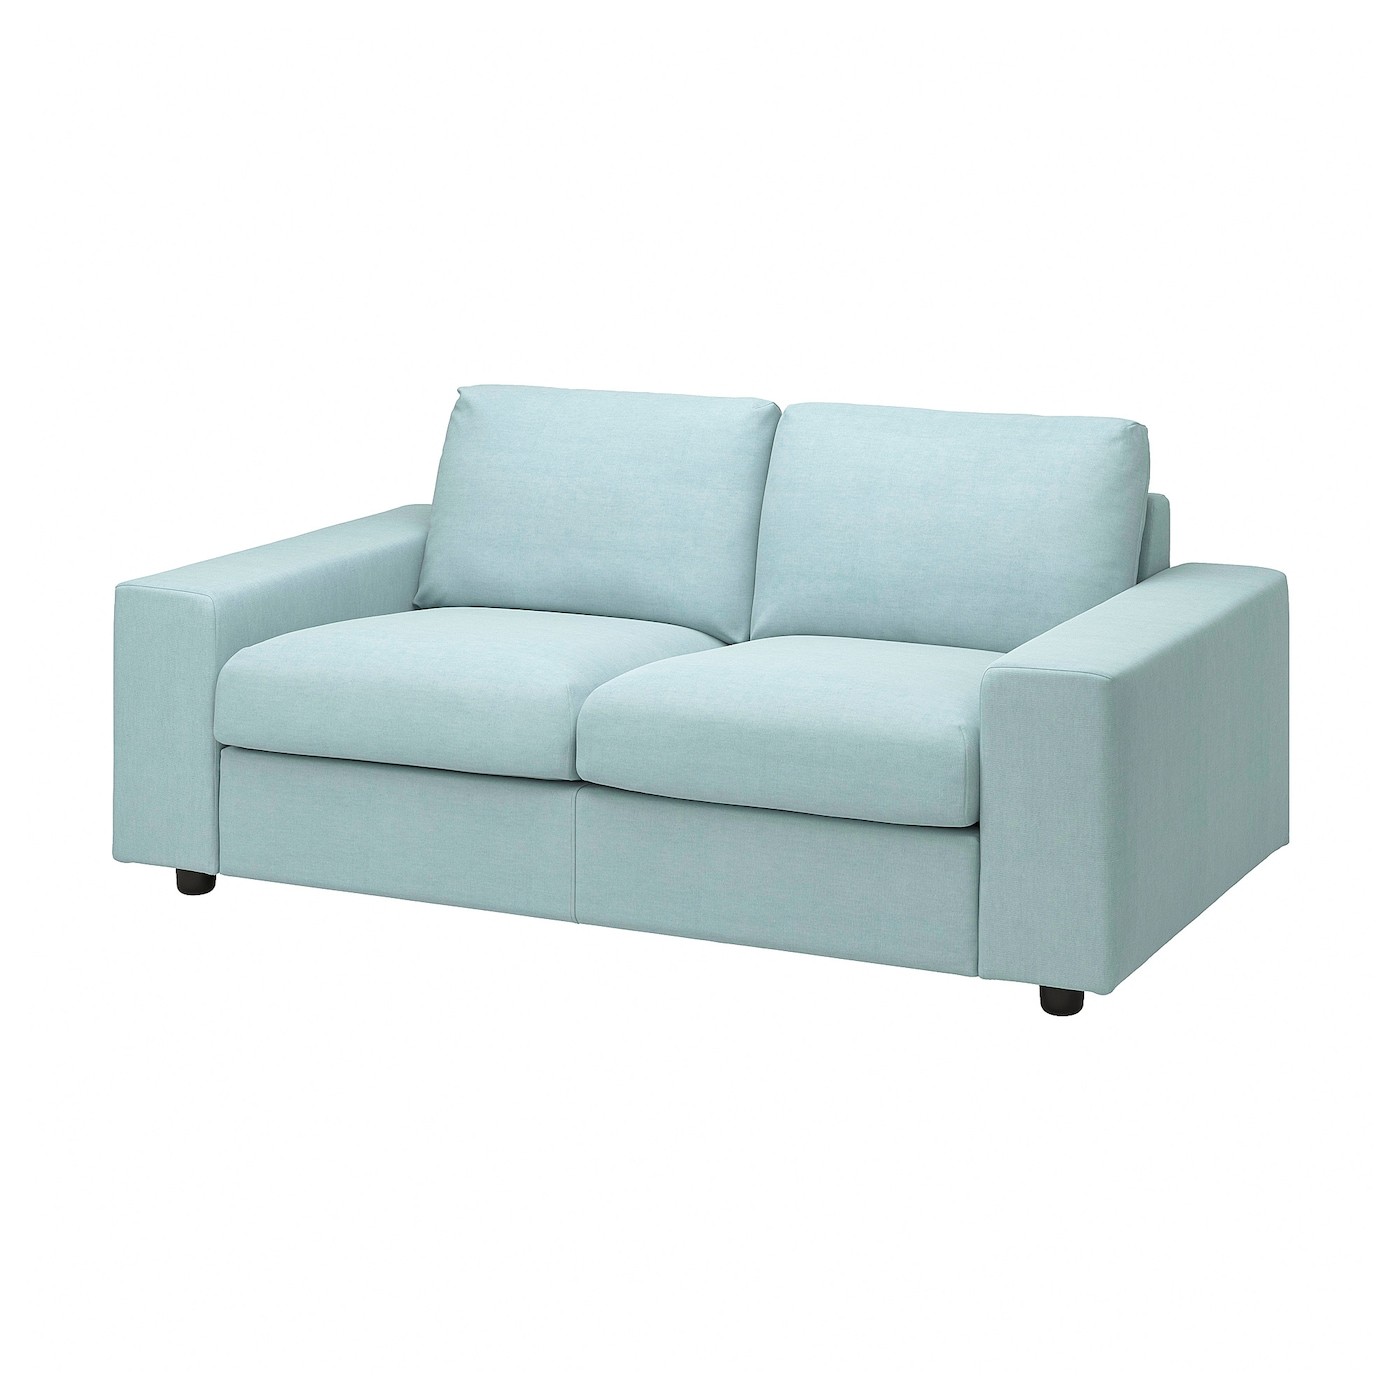 VIMLE Cover for 2-seat sofa